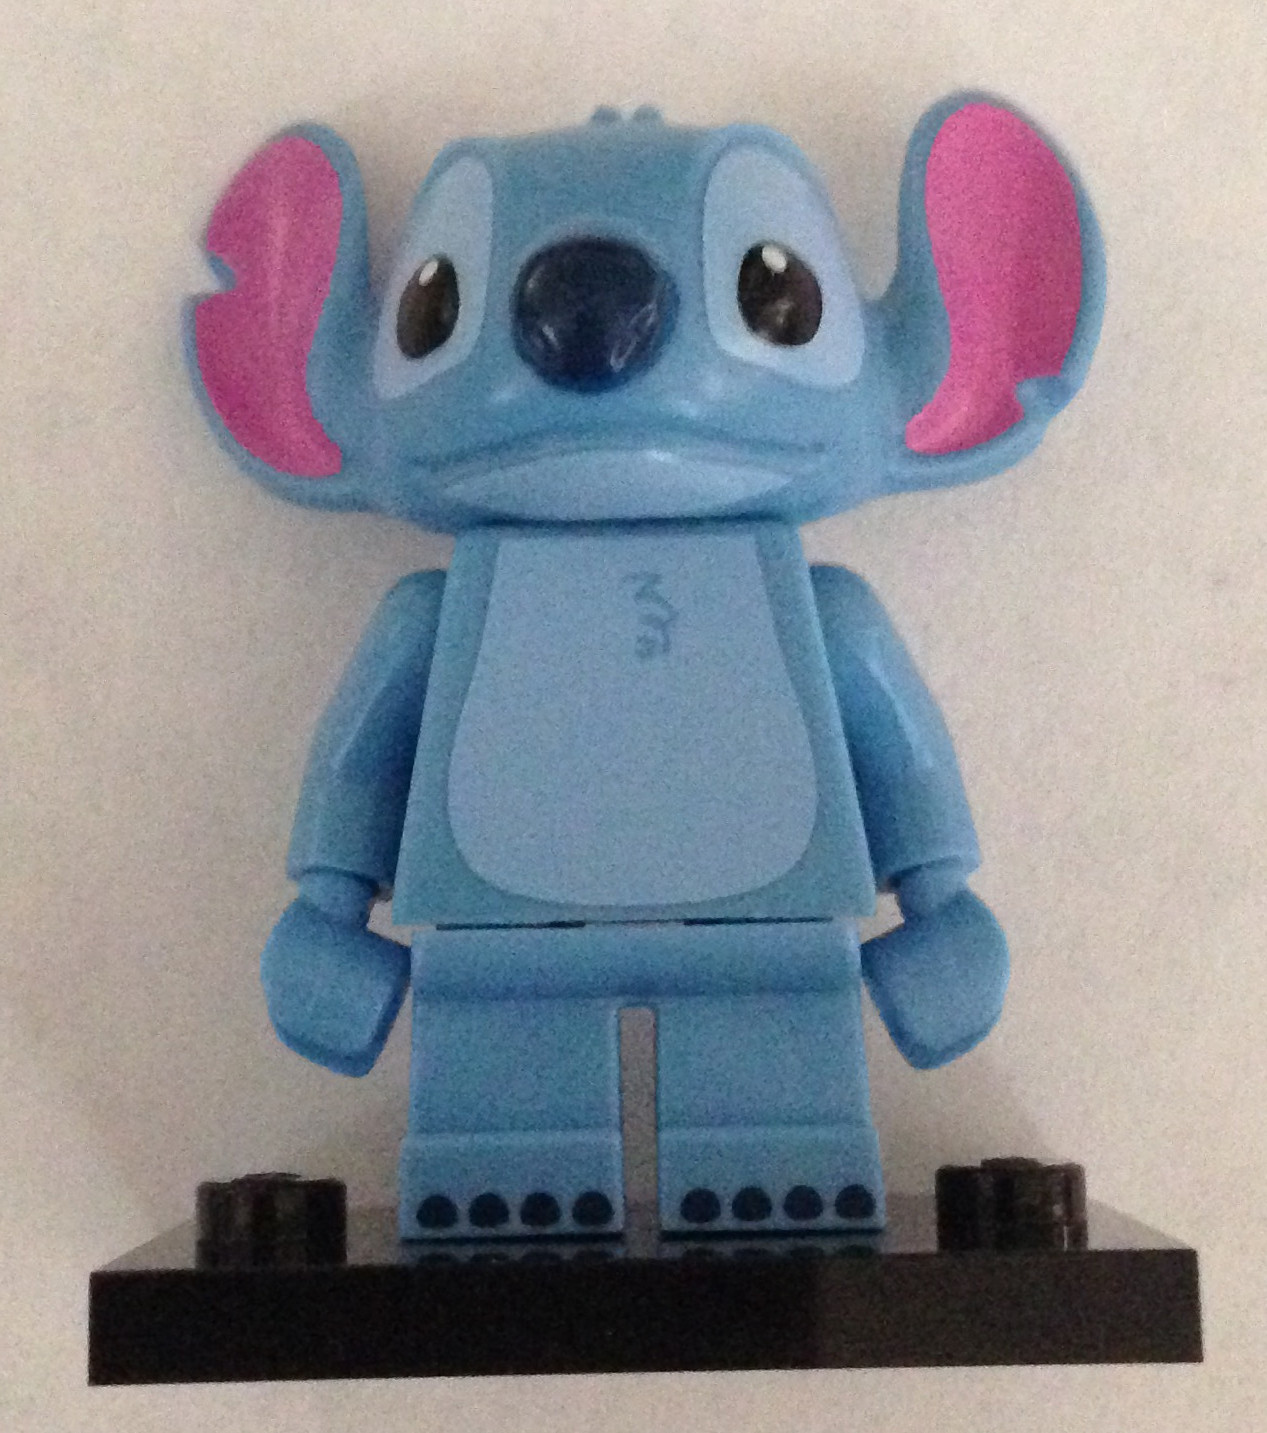 LEGO Disney Minifigure Series 1 Stitch 71012 Minifigure